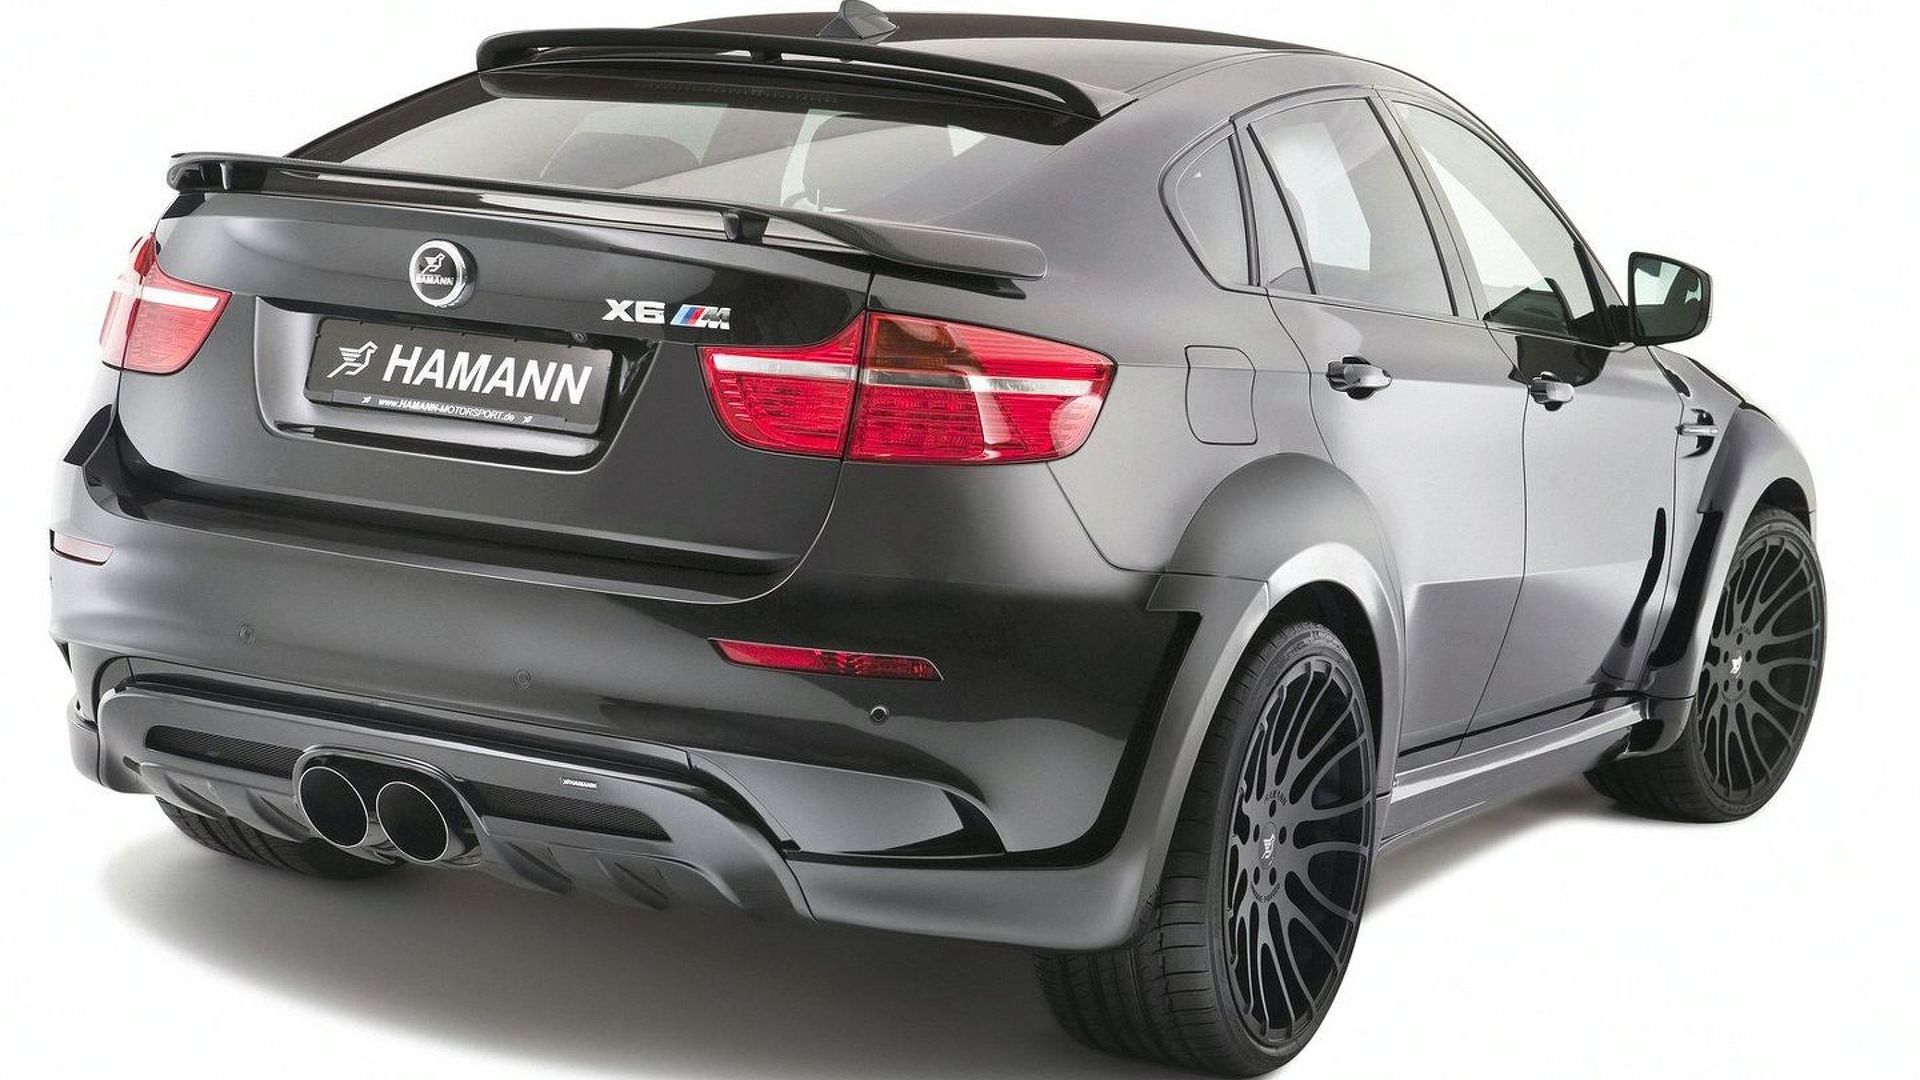 Hamann TYCOON EVO M based on BMW X6 M Set for Geneva Debut